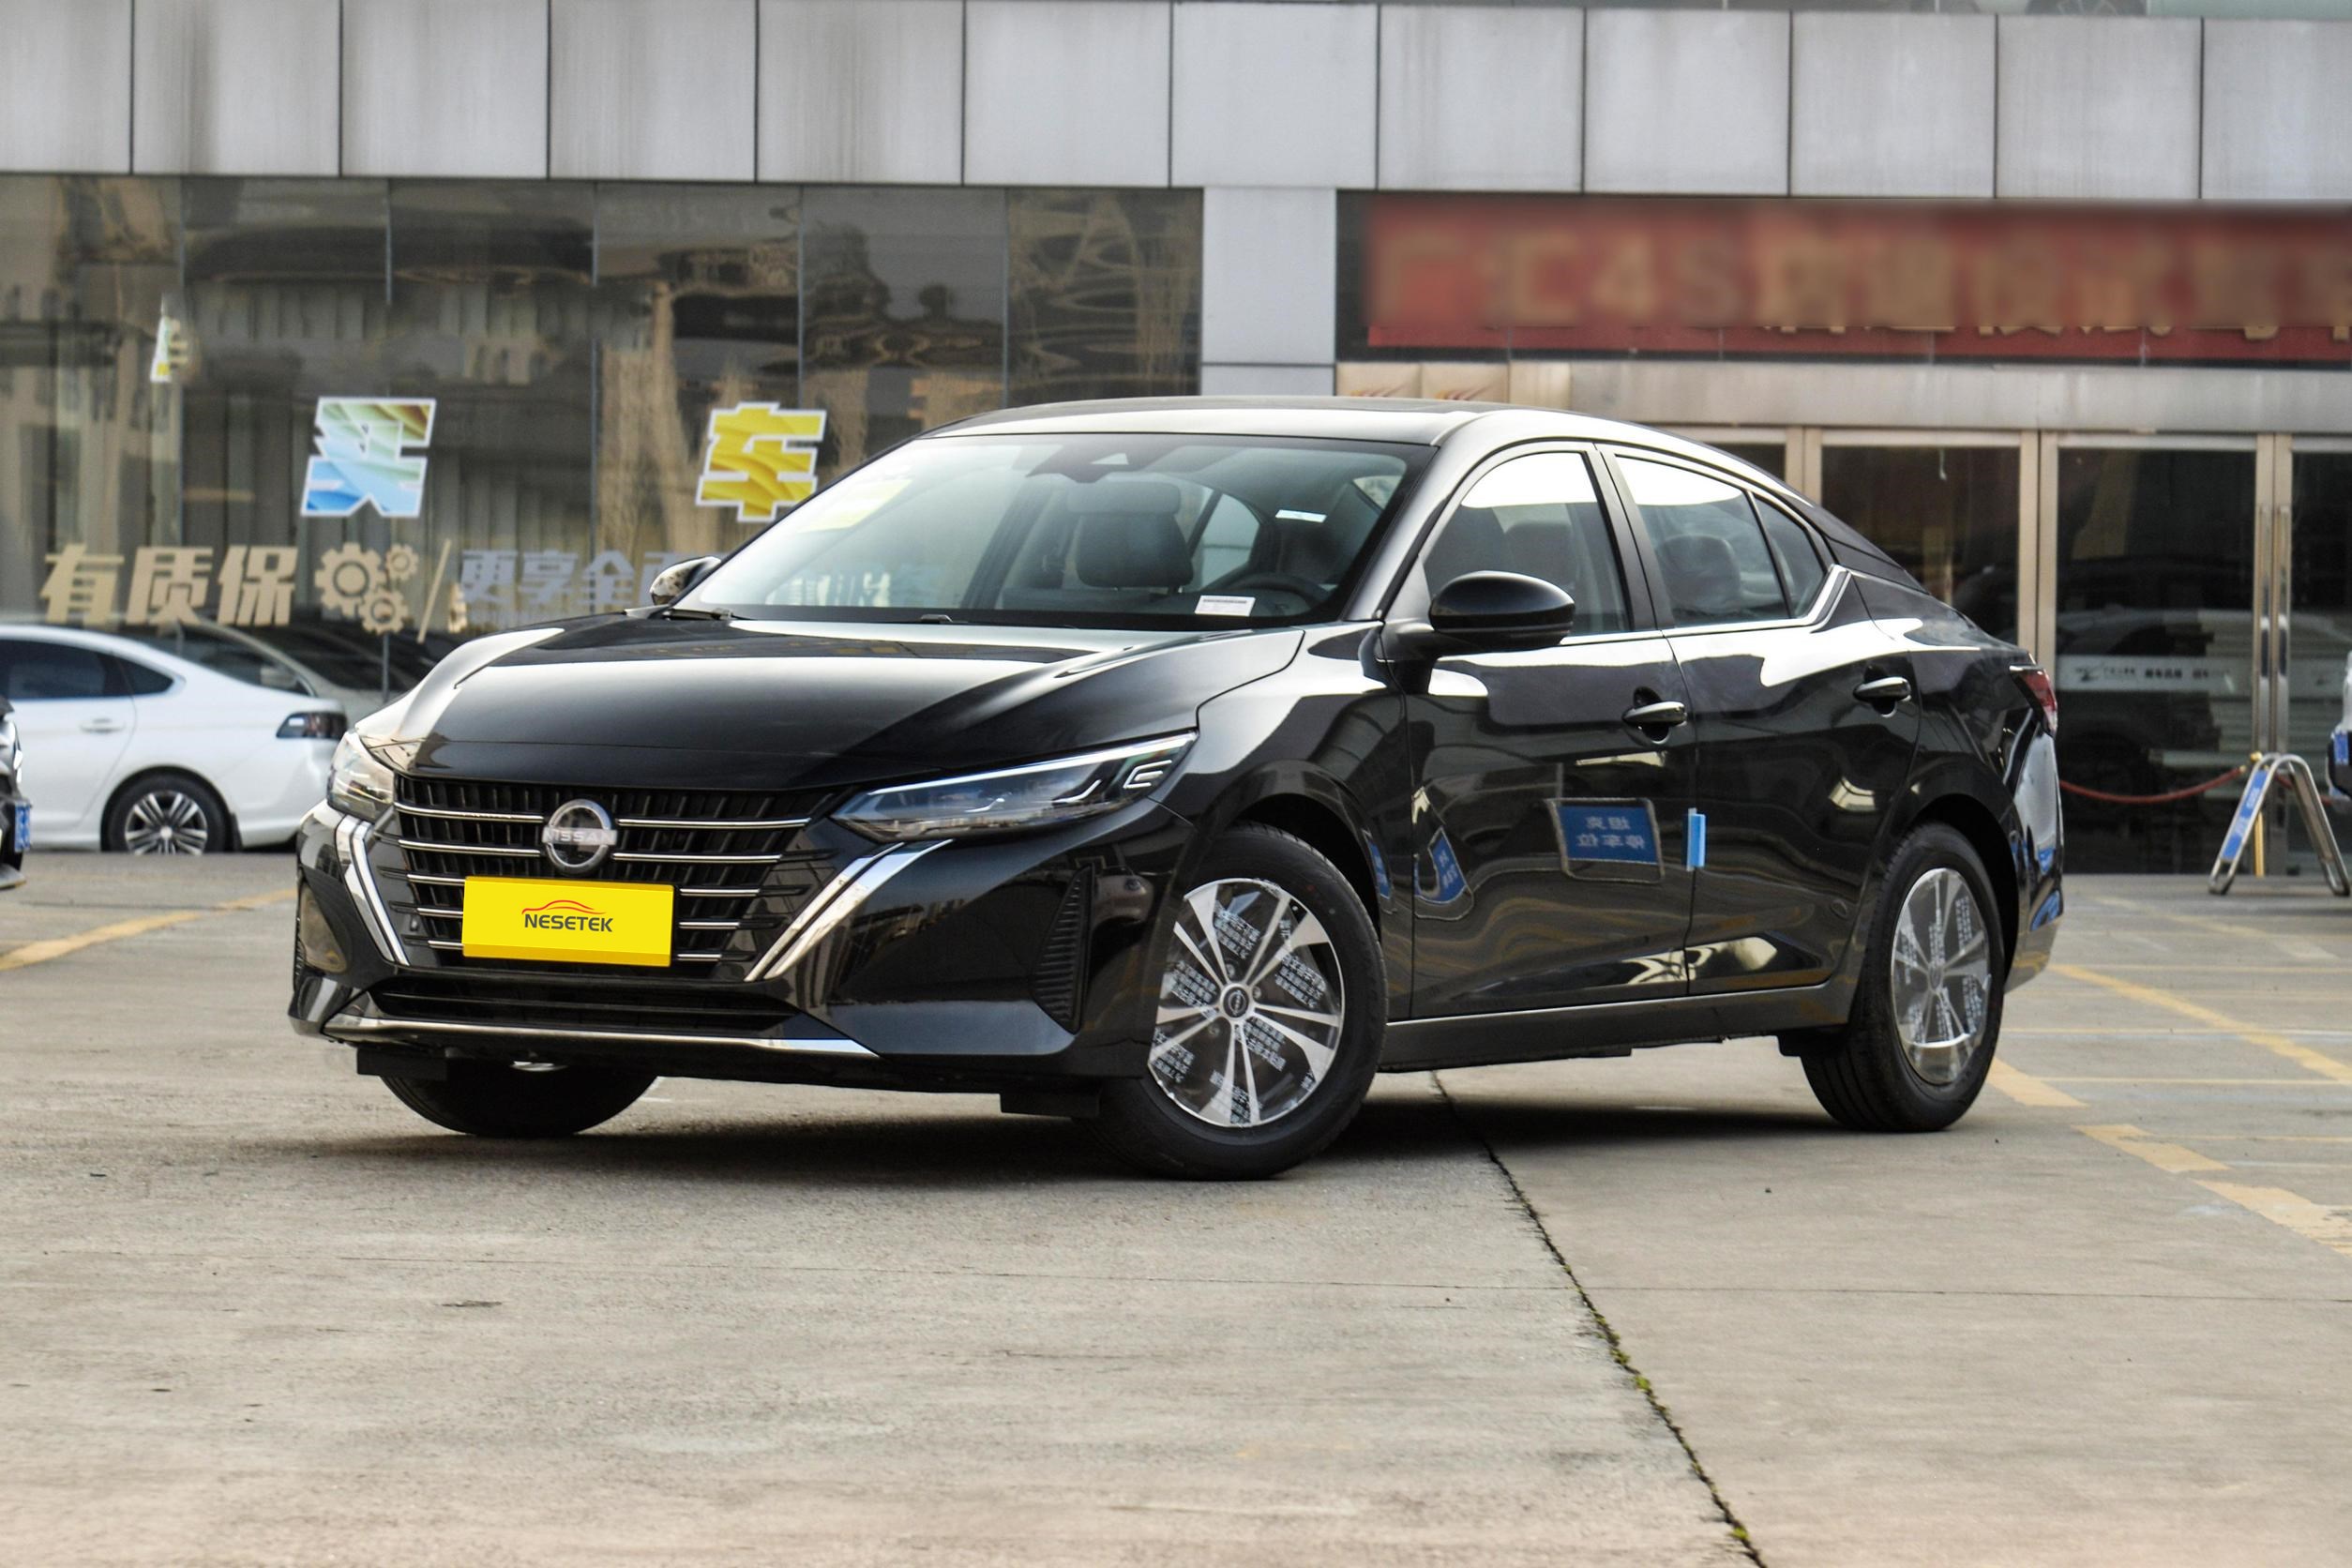 Nissan Sylphy Sedan Car Gasoline Hybrid Low Price New Vehicle China